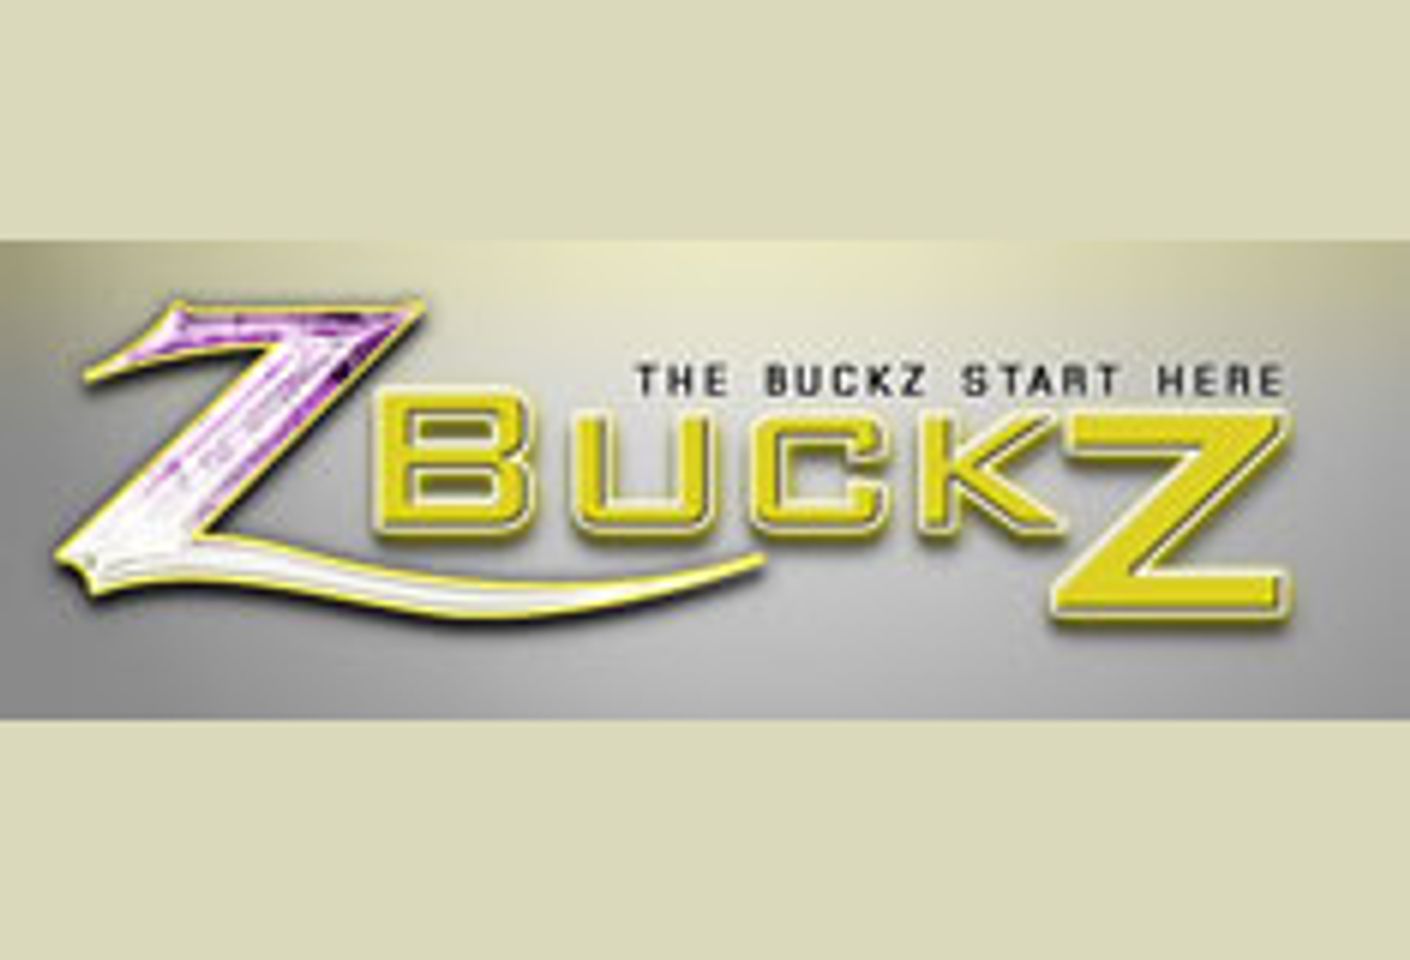 zBuckz Launches BoysStarMovie.com